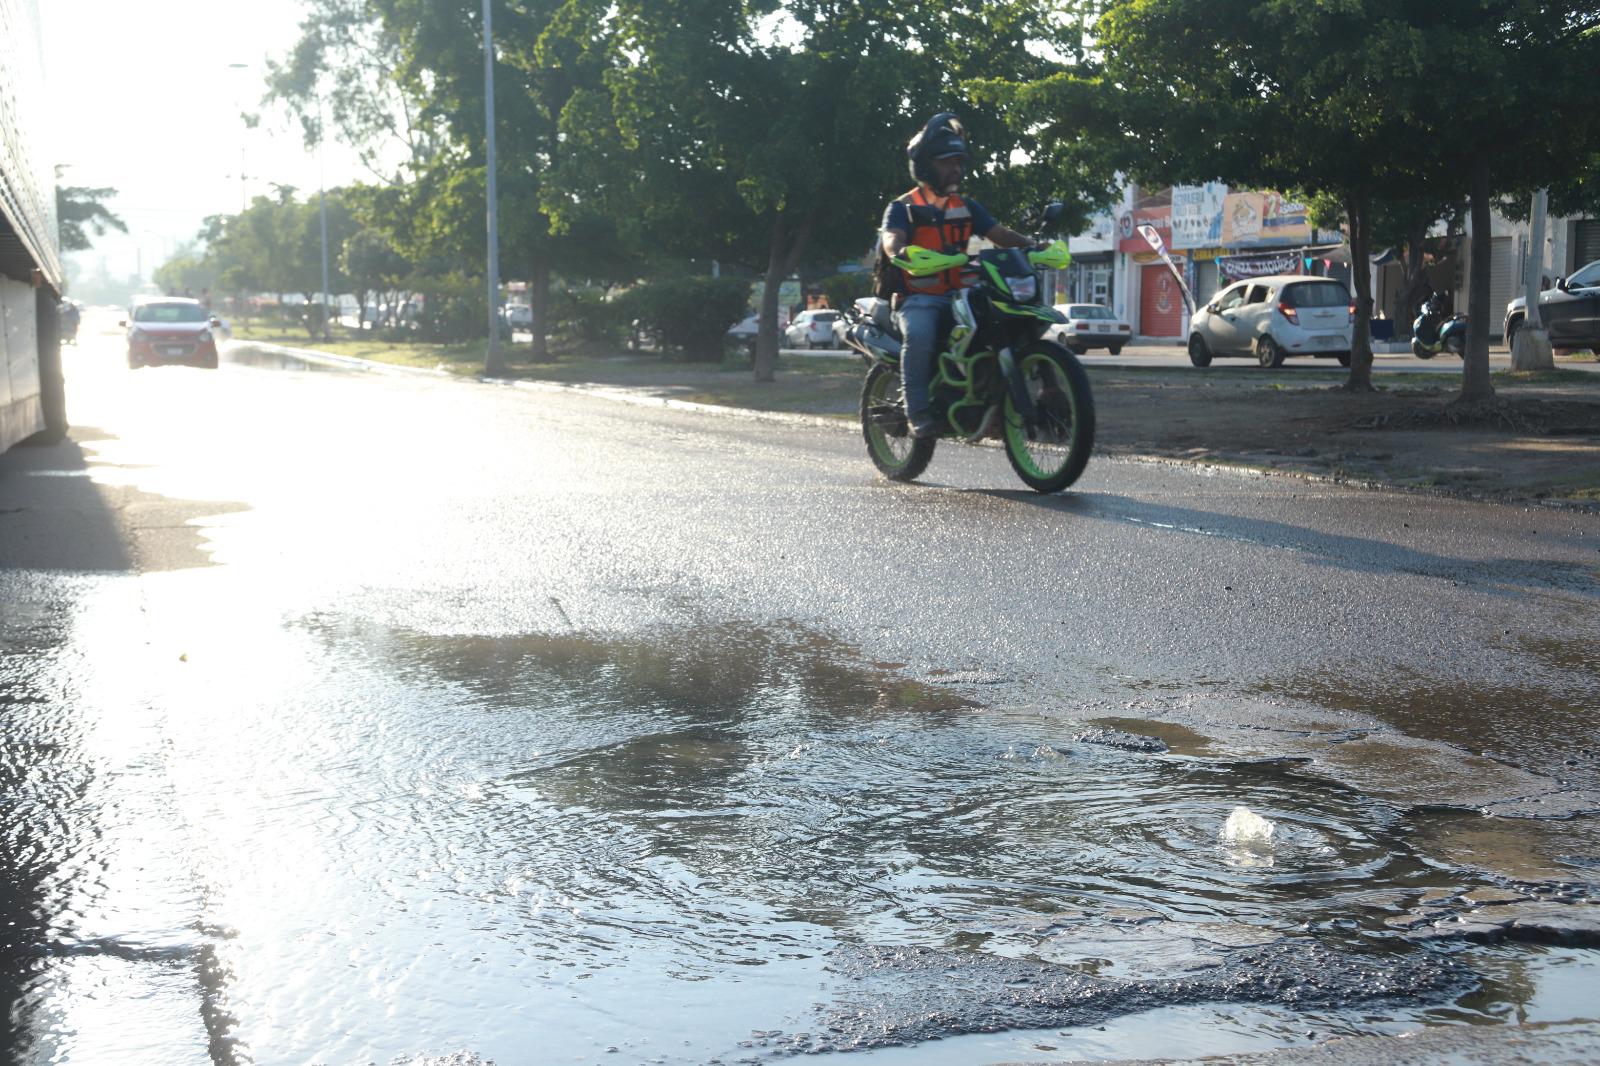 $!Detectan más de 100 derrames de aguas negras en Mazatlán: Alcalde